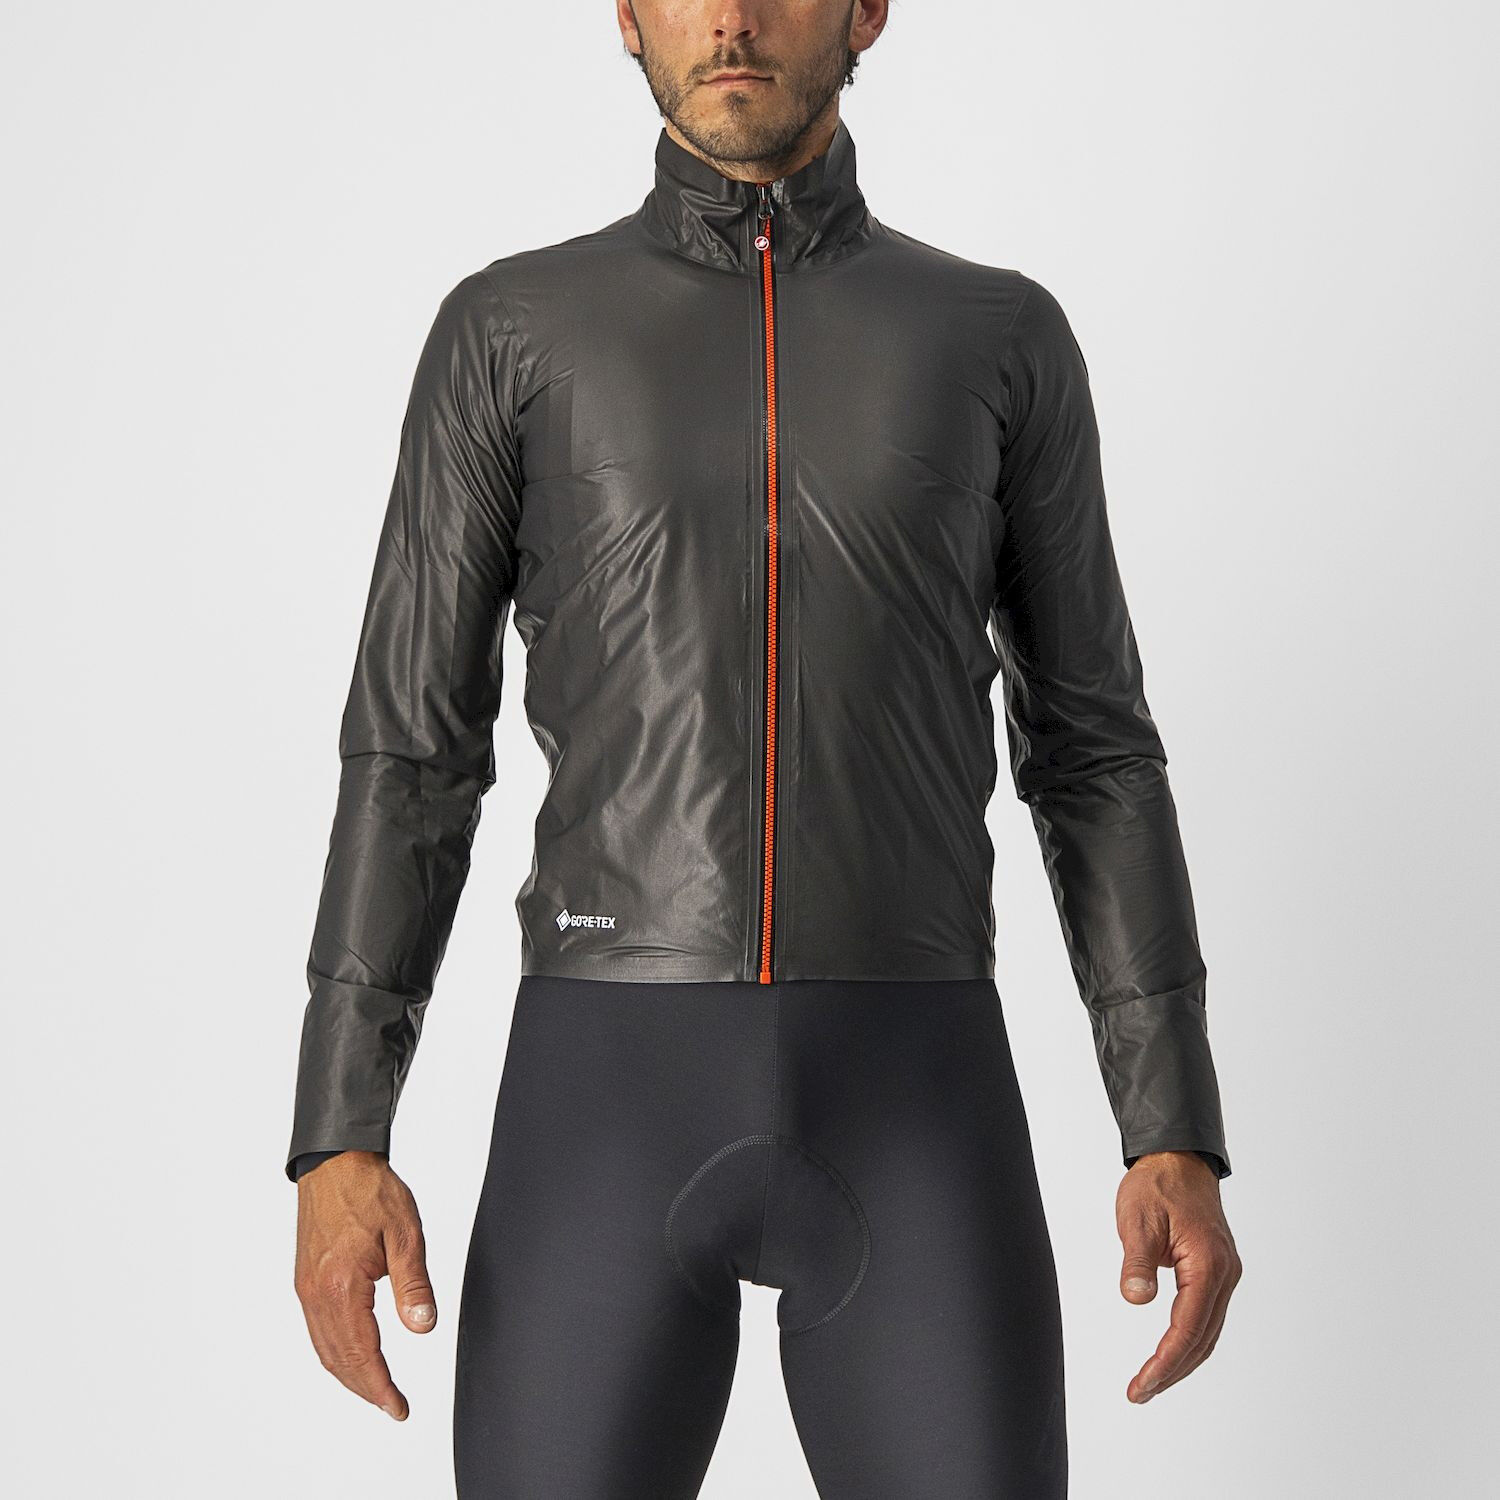 Castelli Idro 3 - Cycling jacket - Men's